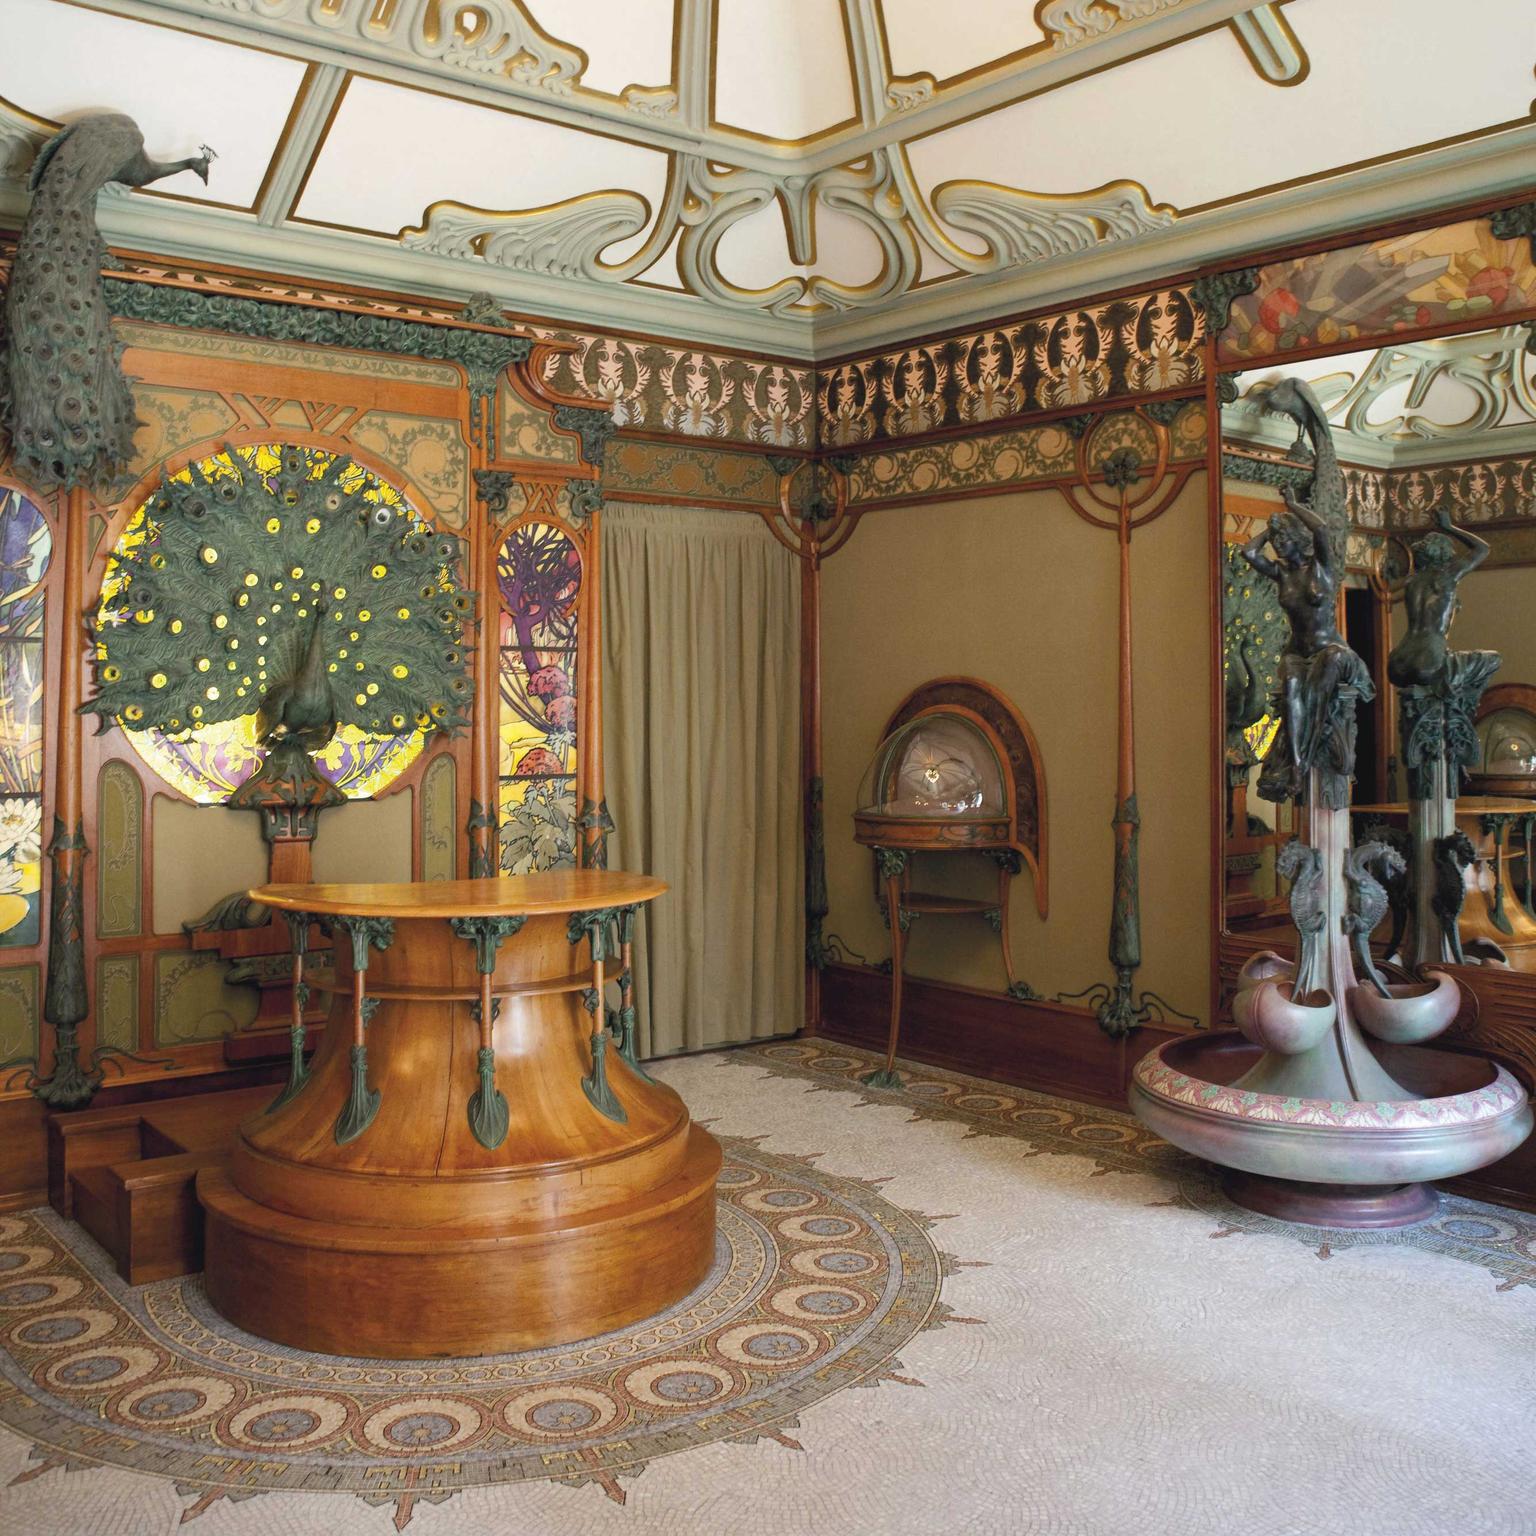 Interior of Fouquet boutique in Paris by Mucha circa 1900